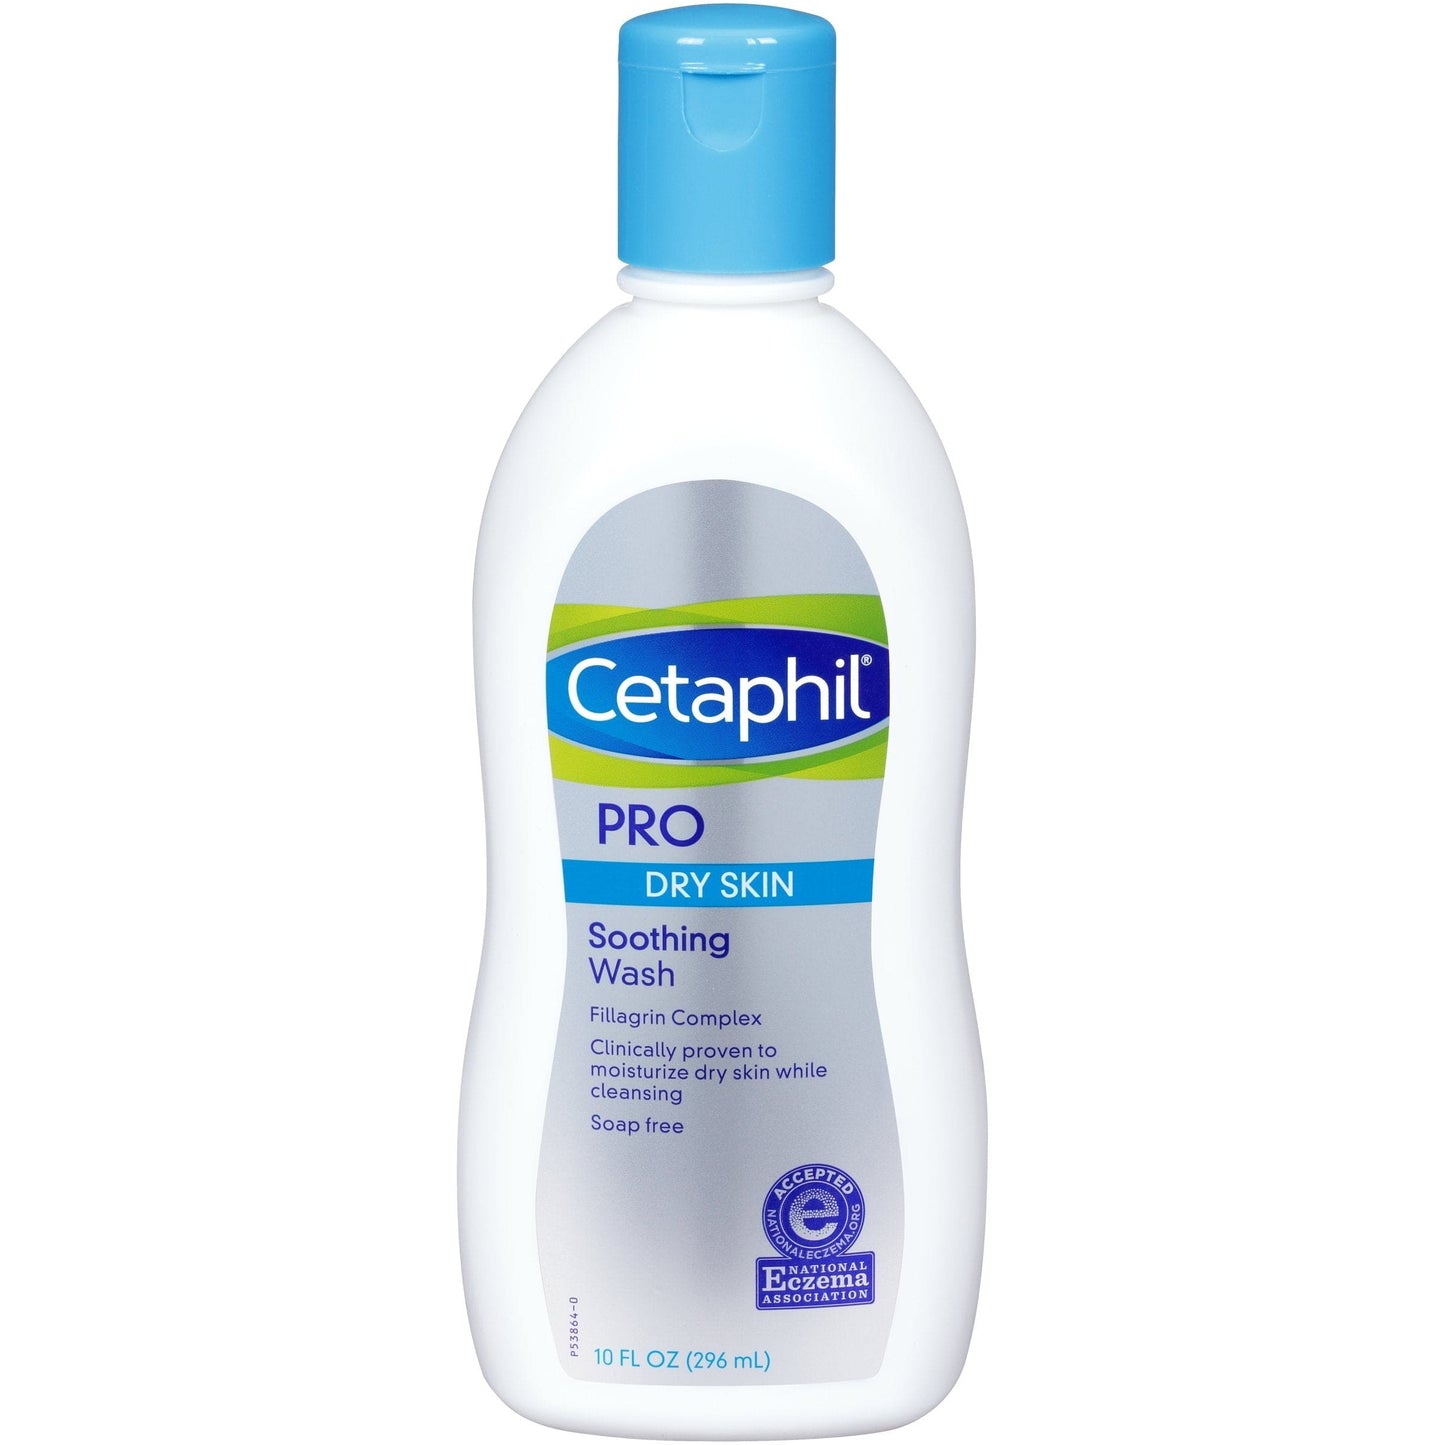 Cetaphil Pro Dry Skin Soothing Wash 296ml